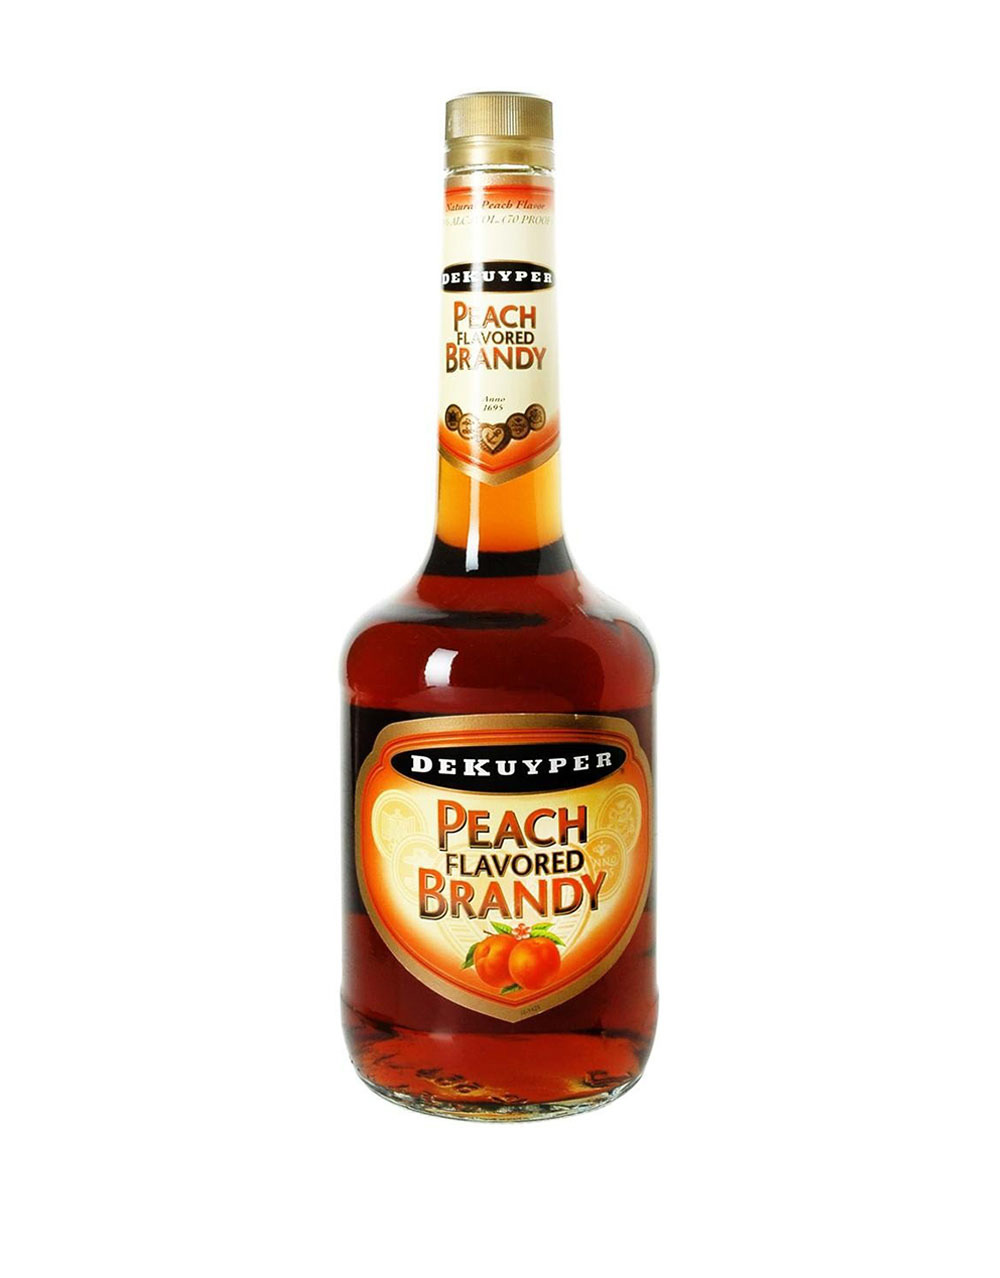 Christian Drouin Calvados 25 Year Old Apple Brandy